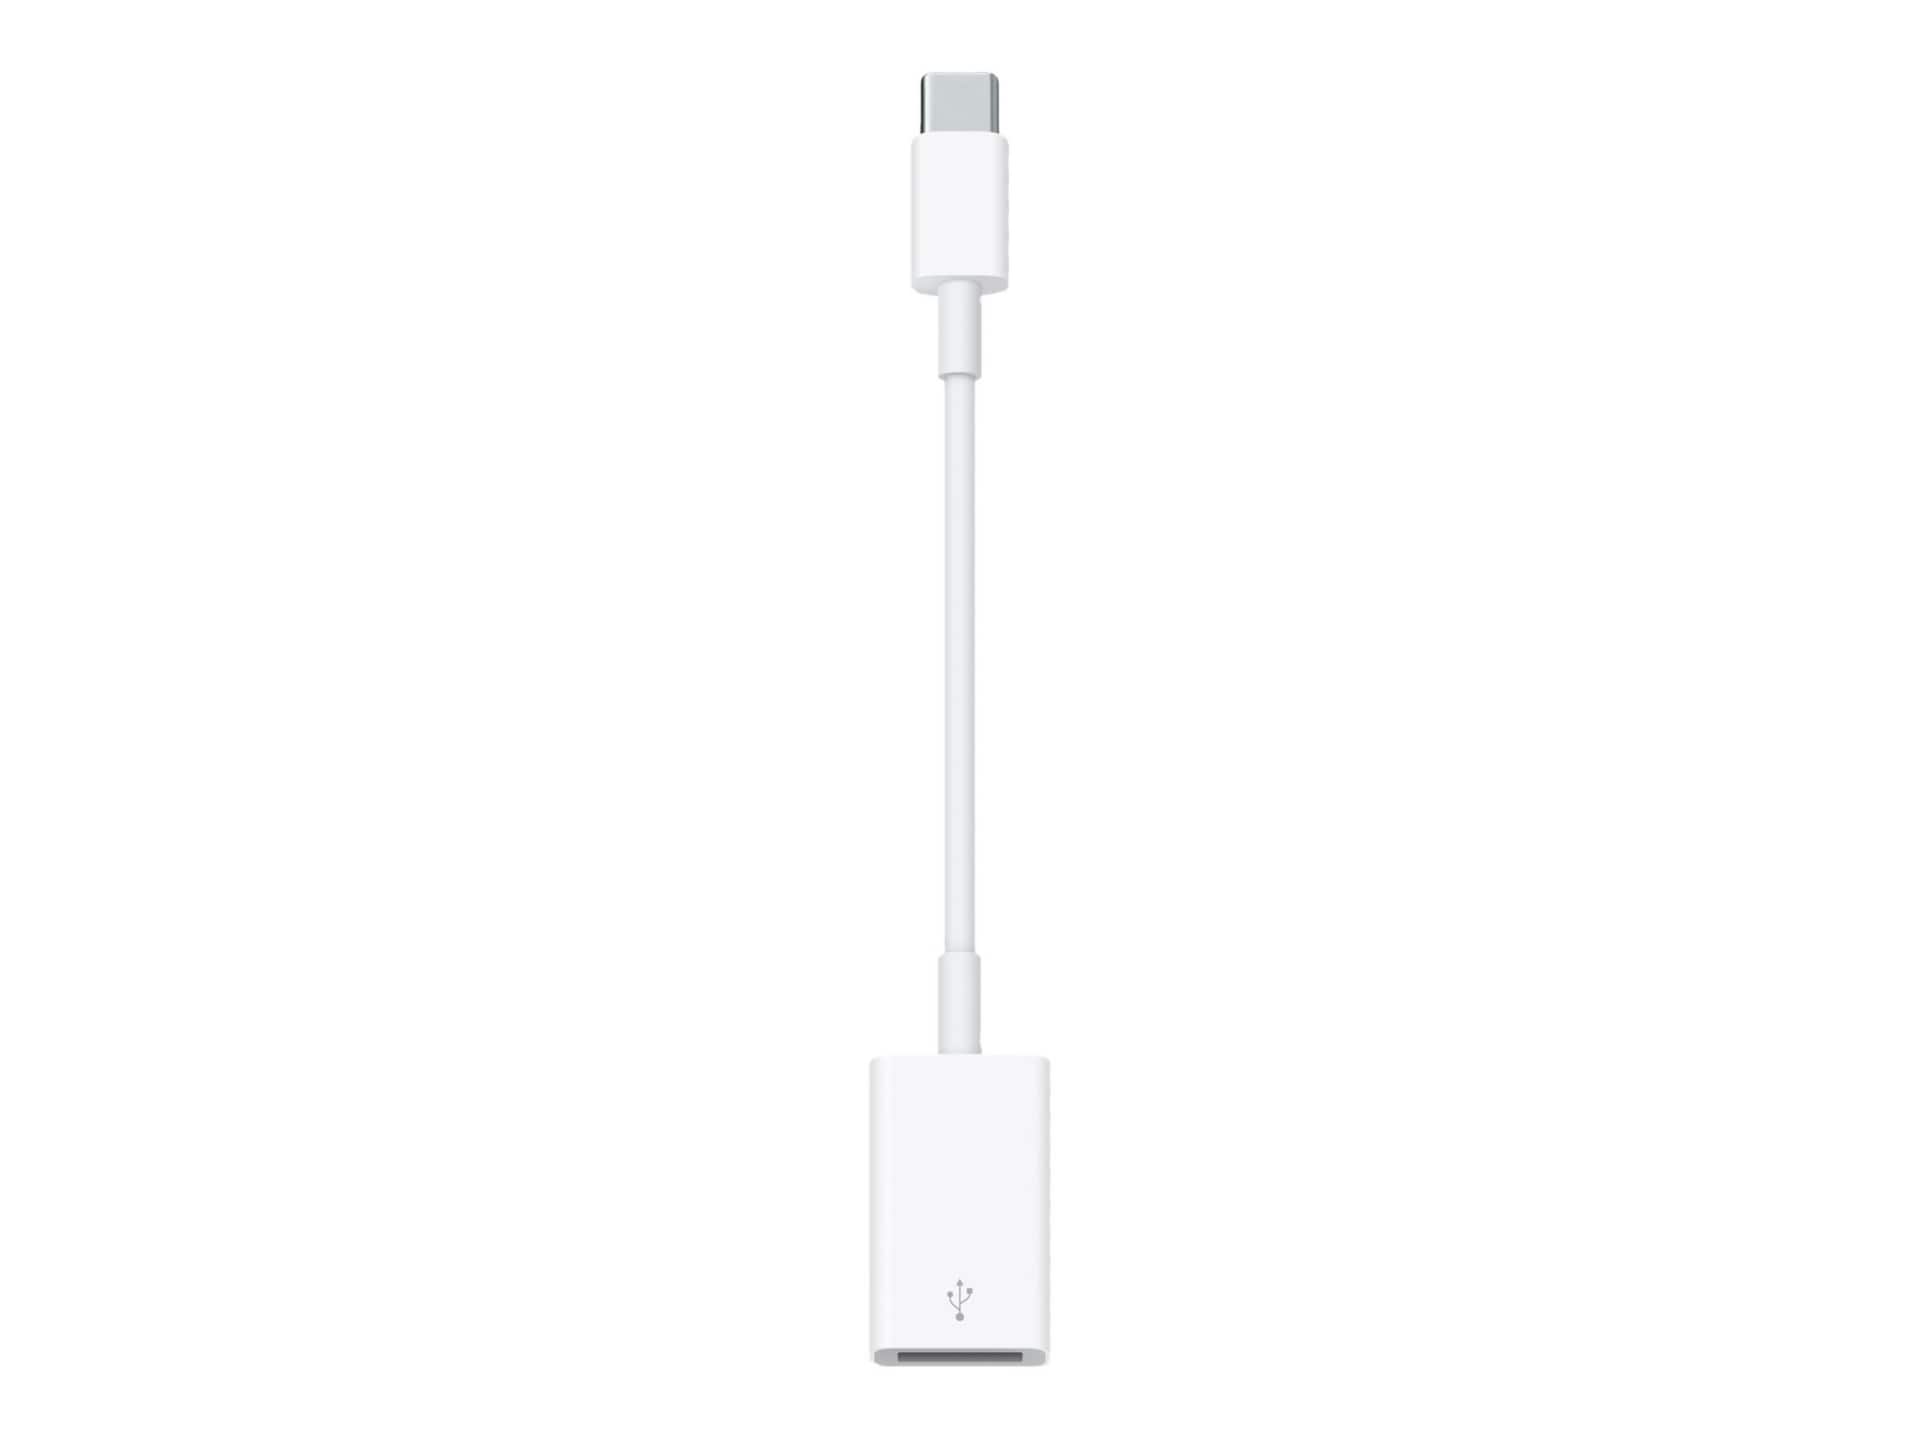  Apple USB-C to USB Adapter : Electronics